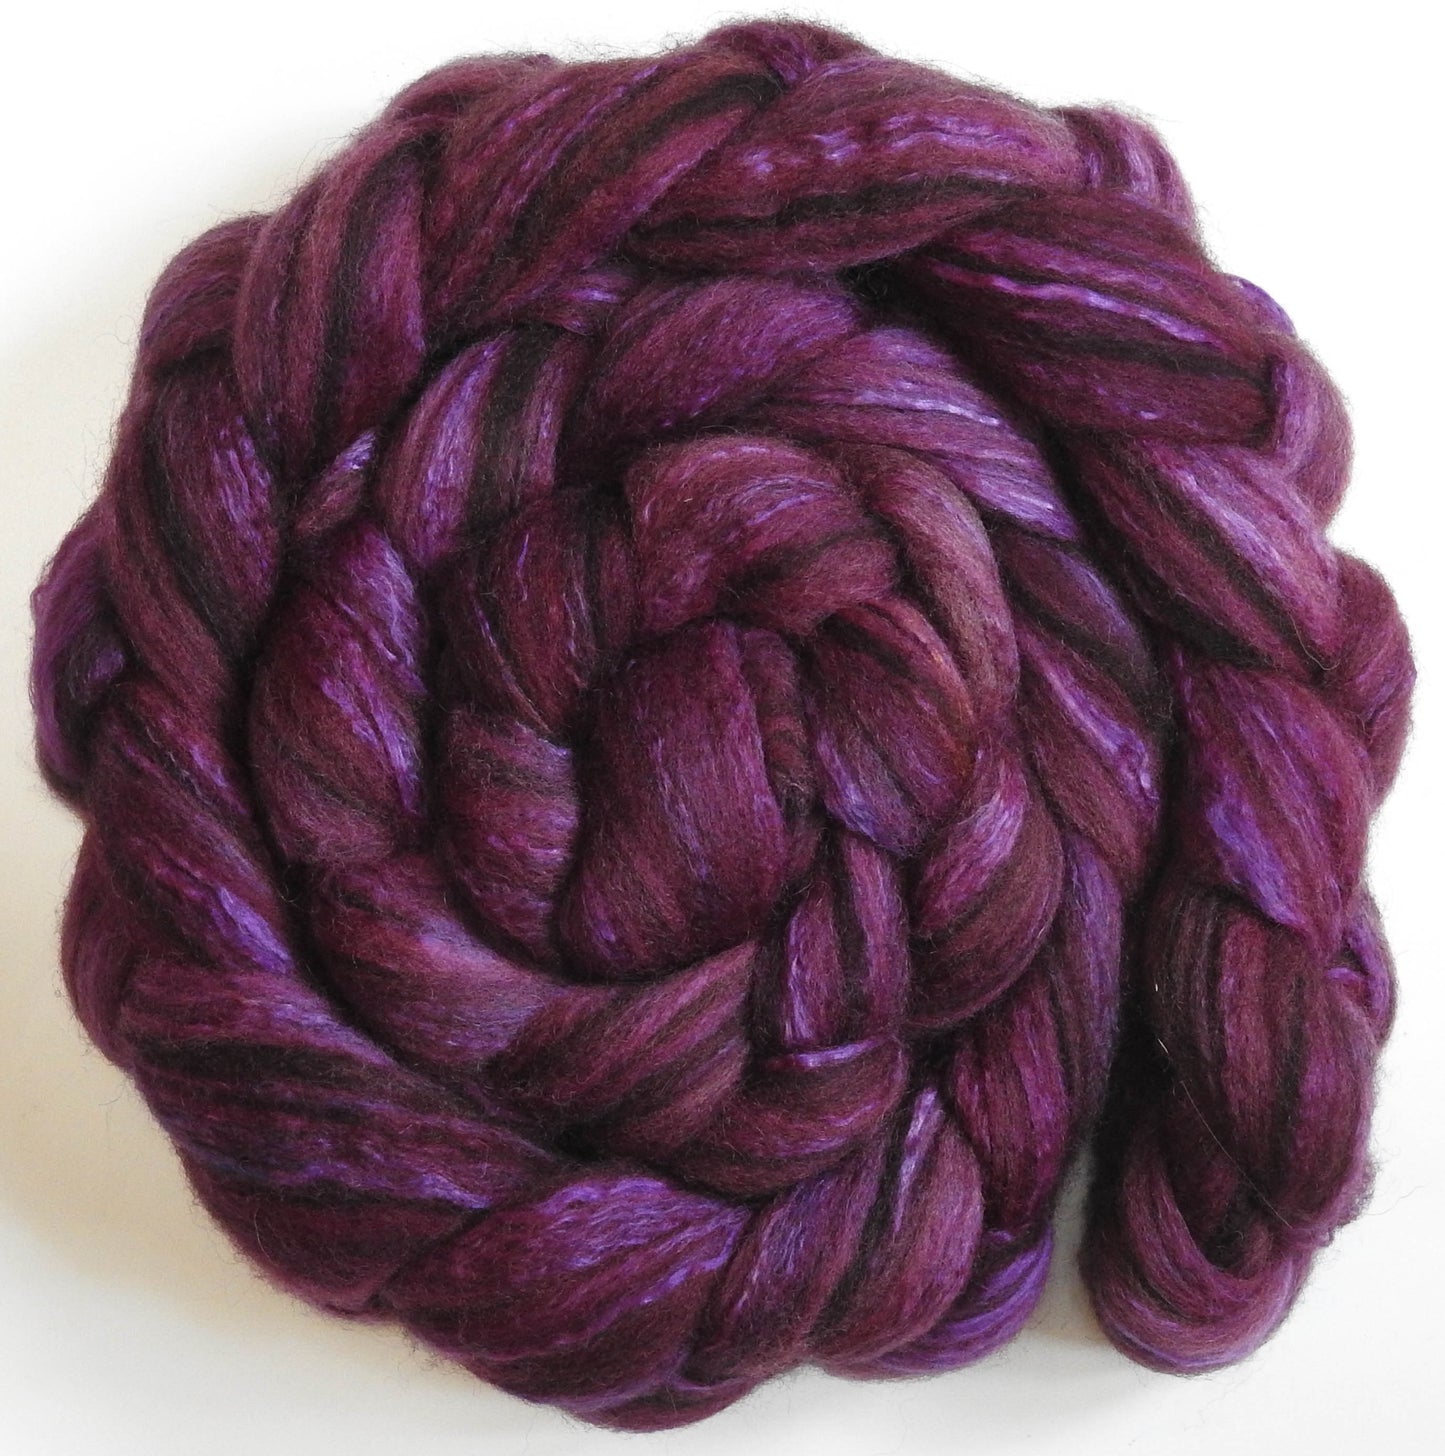 Jelly-Lover (5.7 oz) - Humbug Shetland/ Mulberry Silk (75/25)